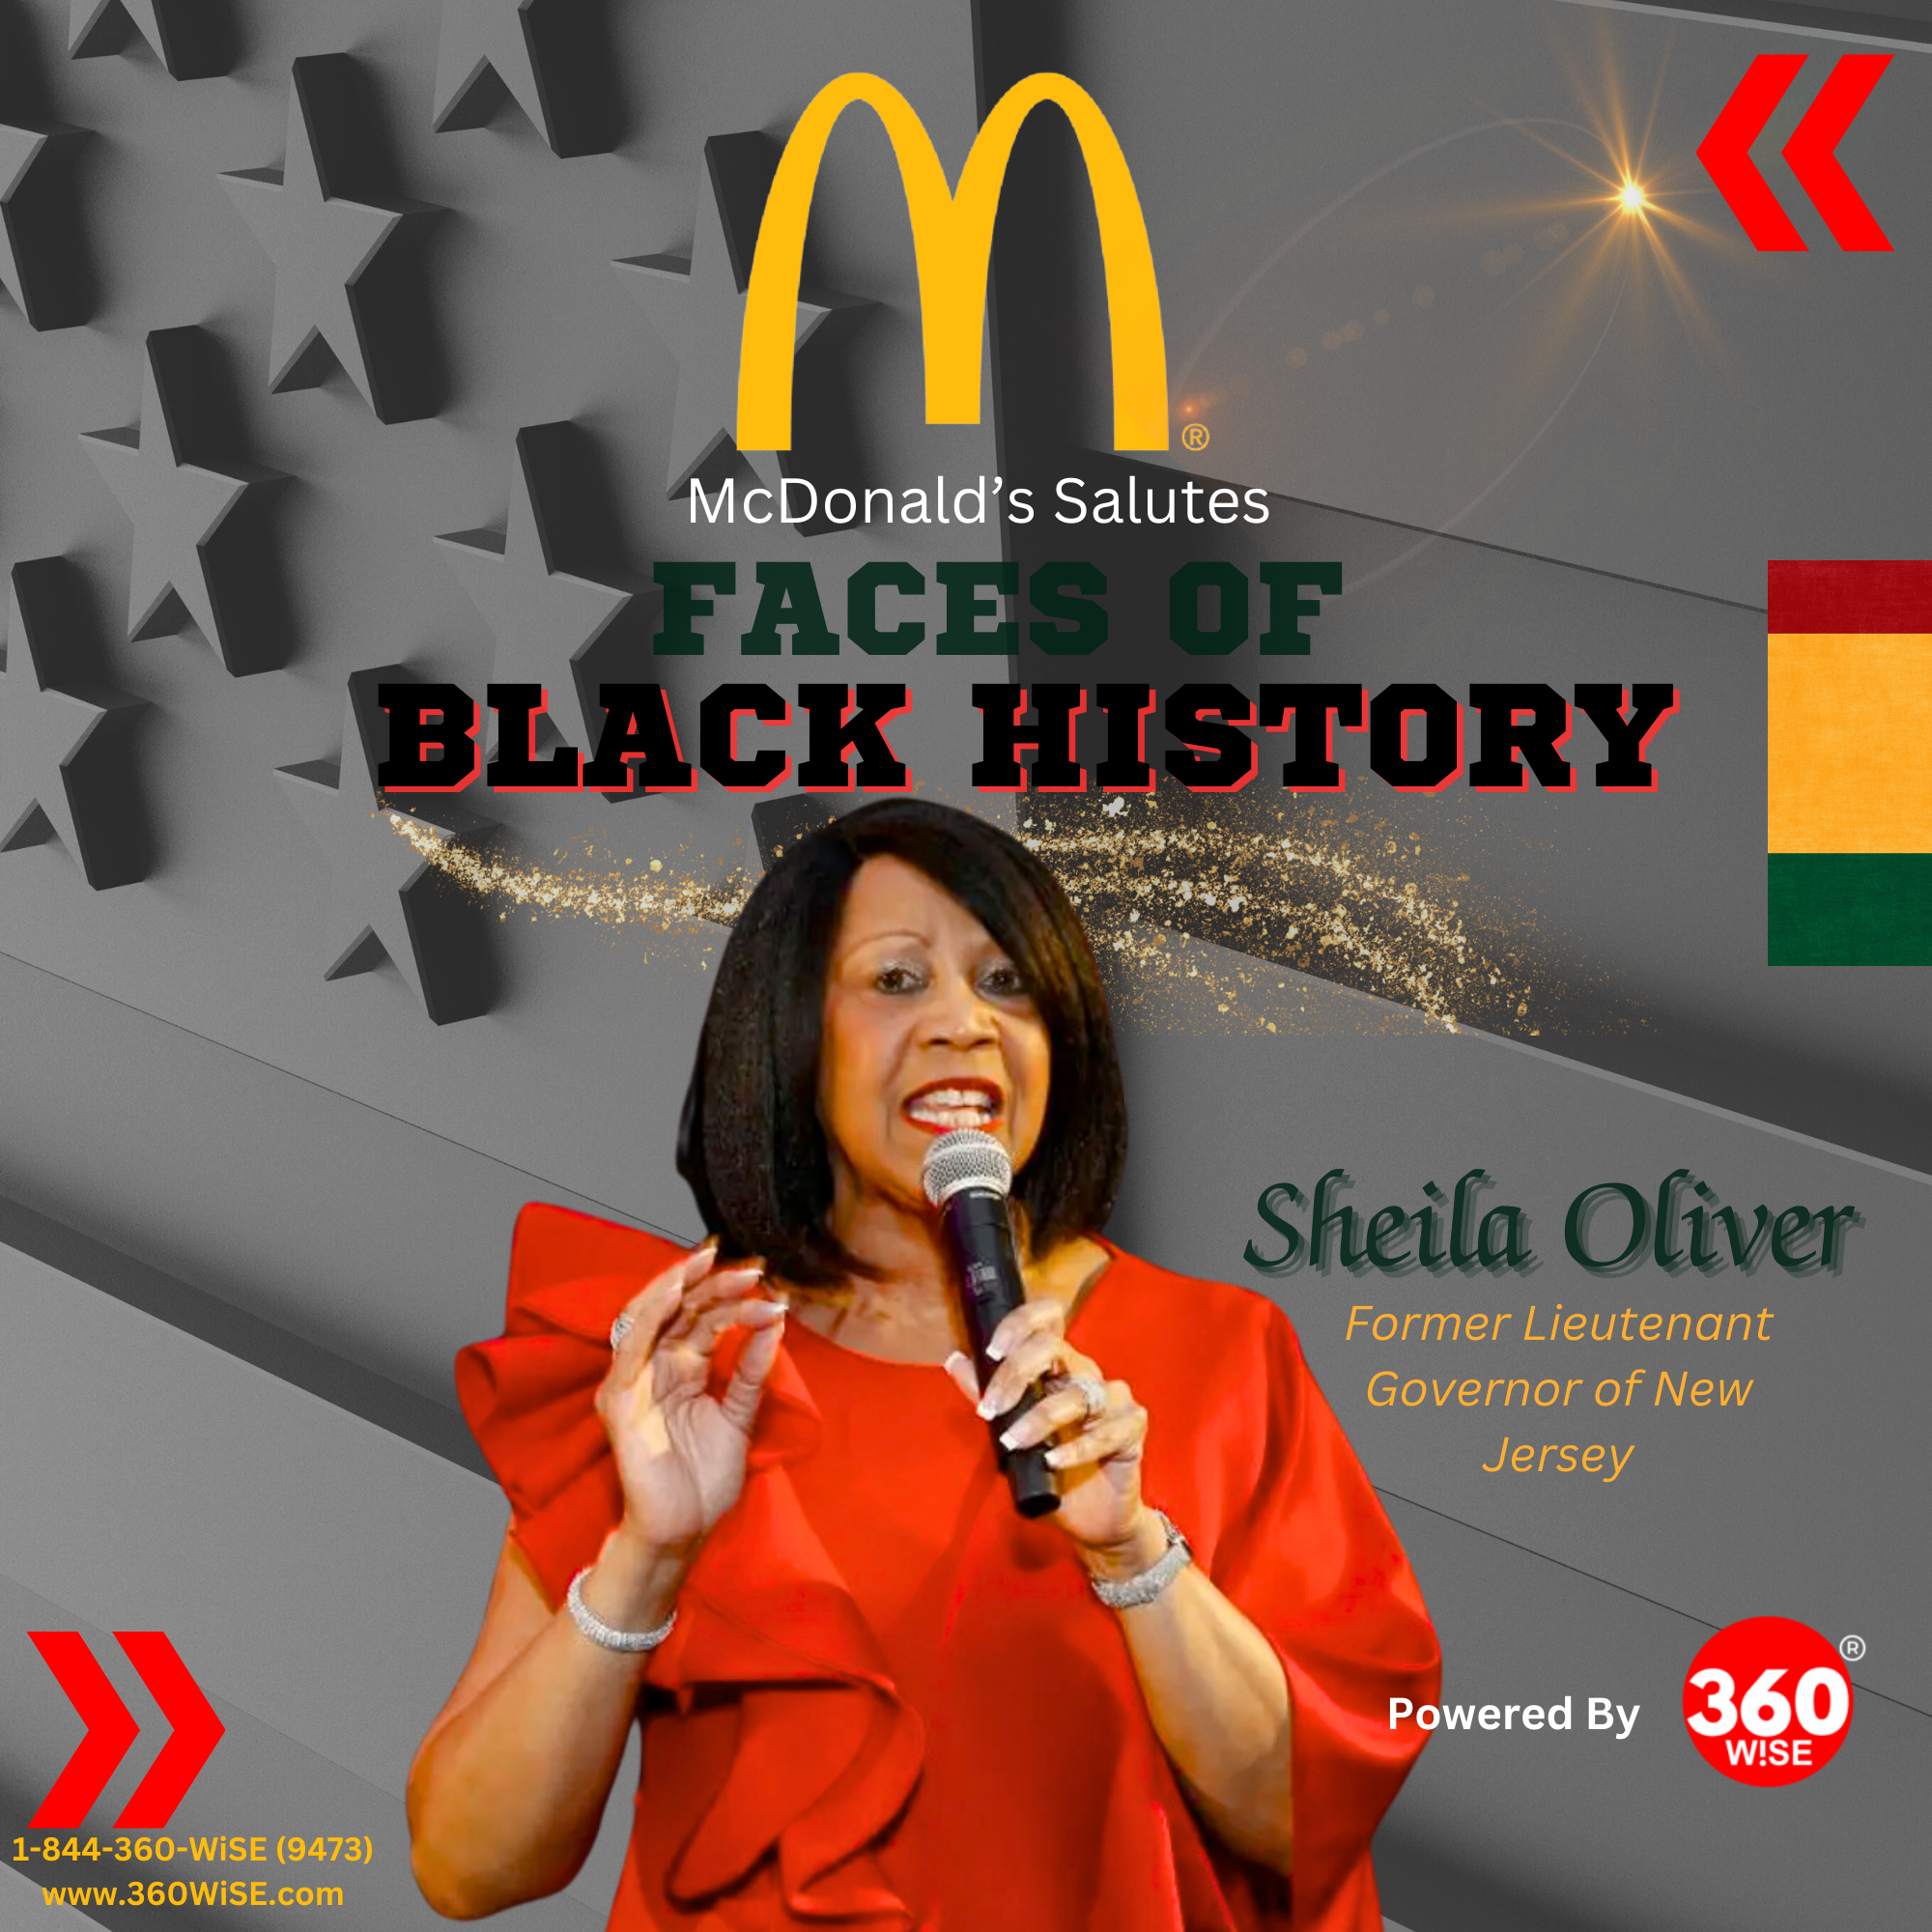 McDonald's Faces of Black History Salutes Sheila Oliver